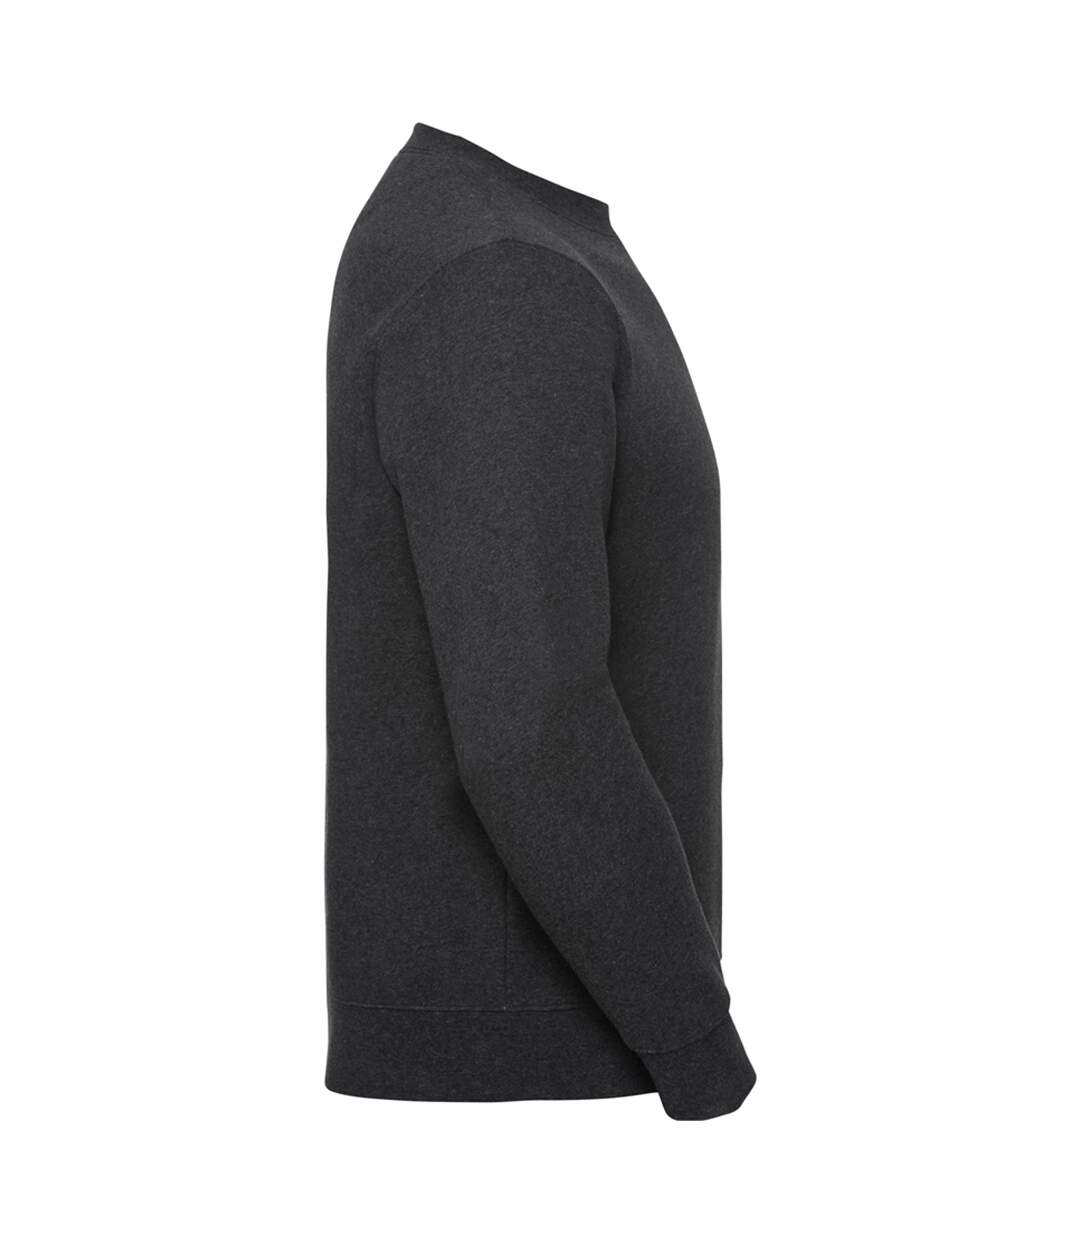 Russell Mens Authentic Melange Sweatshirt (Charcoal Melange) - UTPC3634